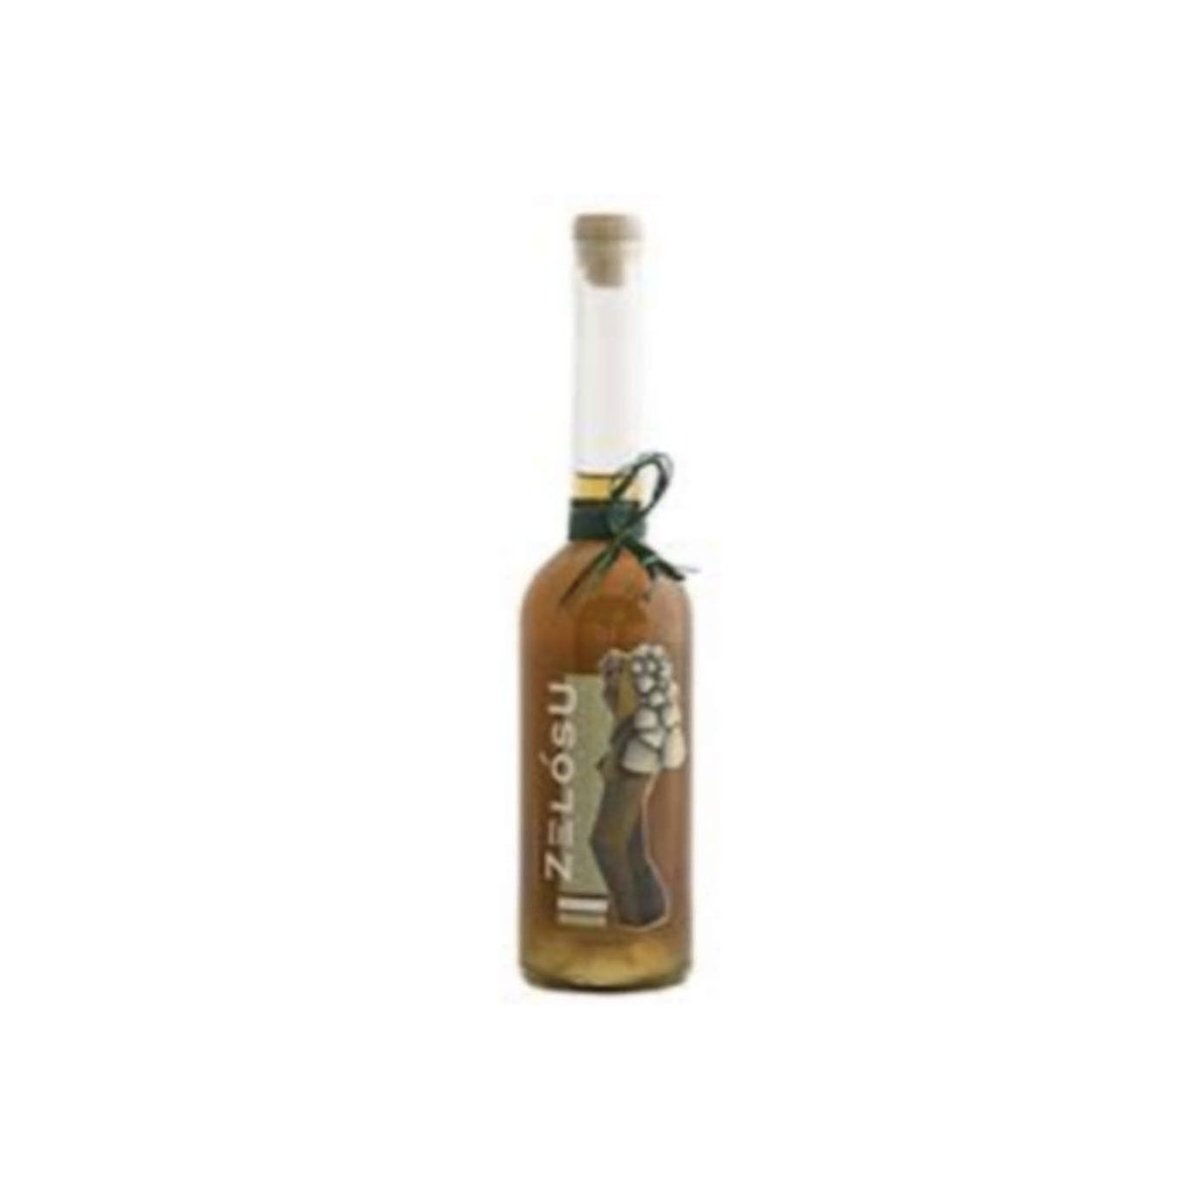 Liquore artigianale Zelosu Sardegna Mirto bianco 50cl